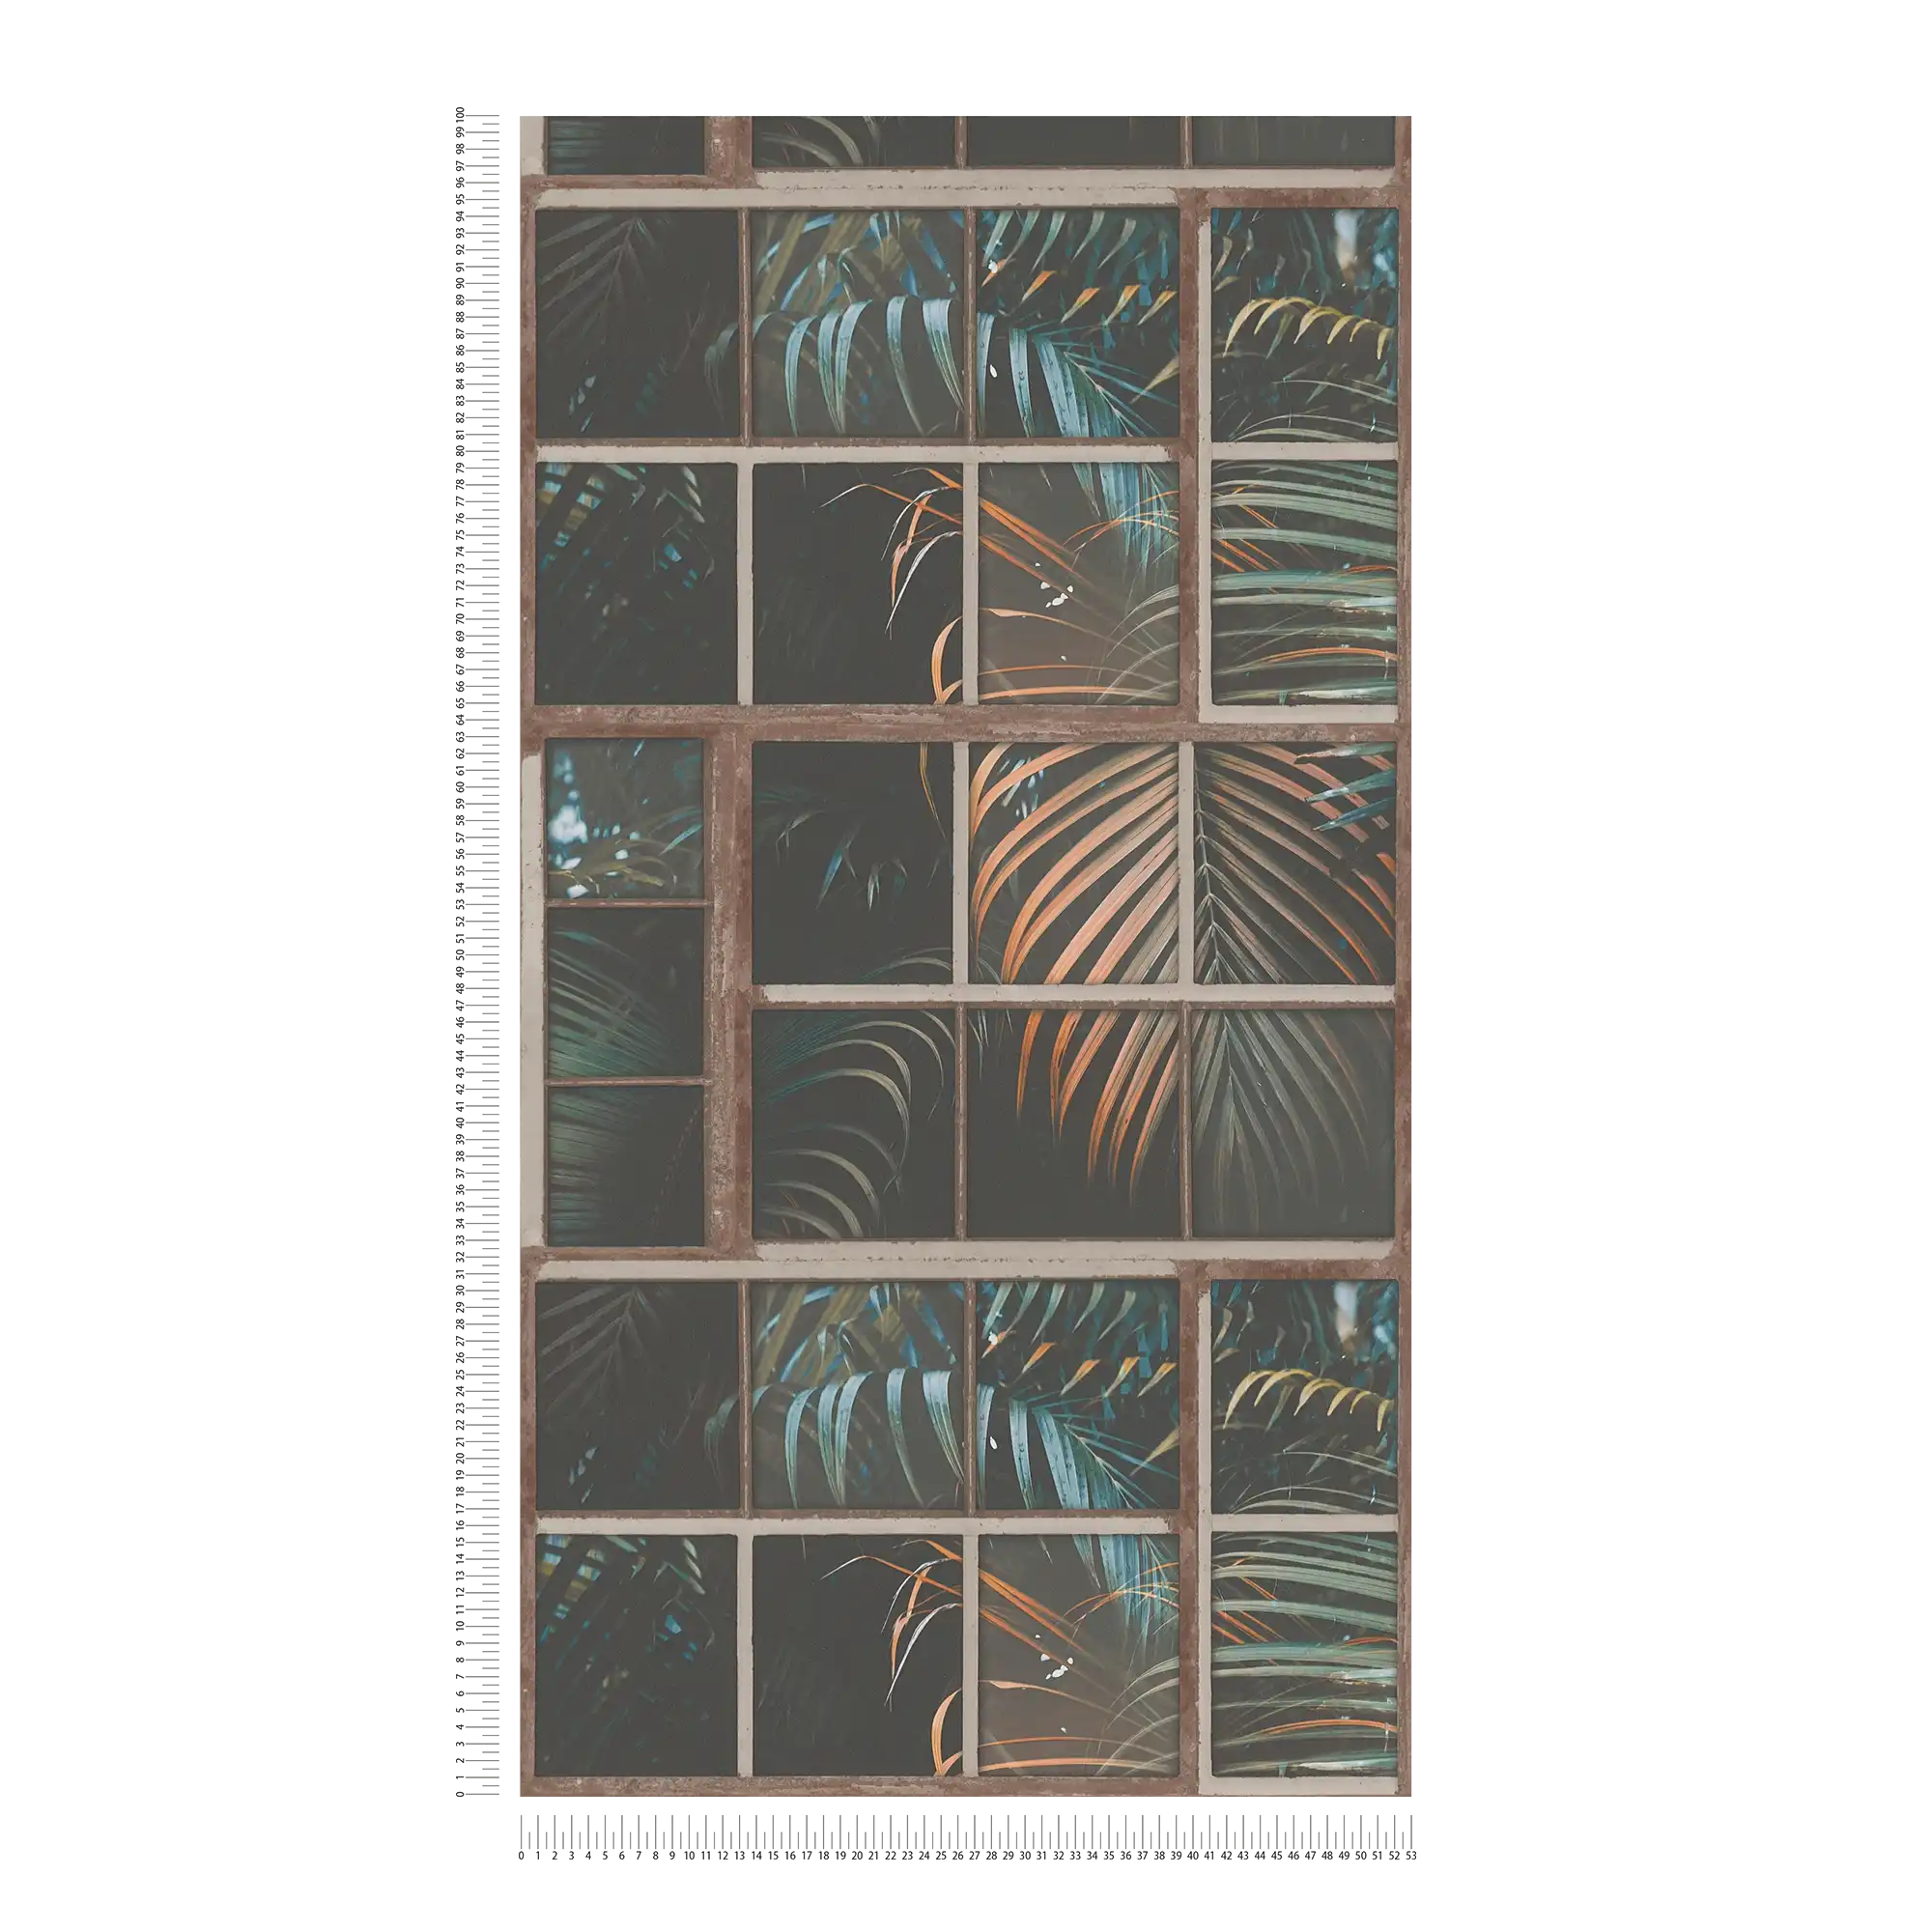             Non-woven wallpaper industry windows & jungle view - brown, petrol, black
        